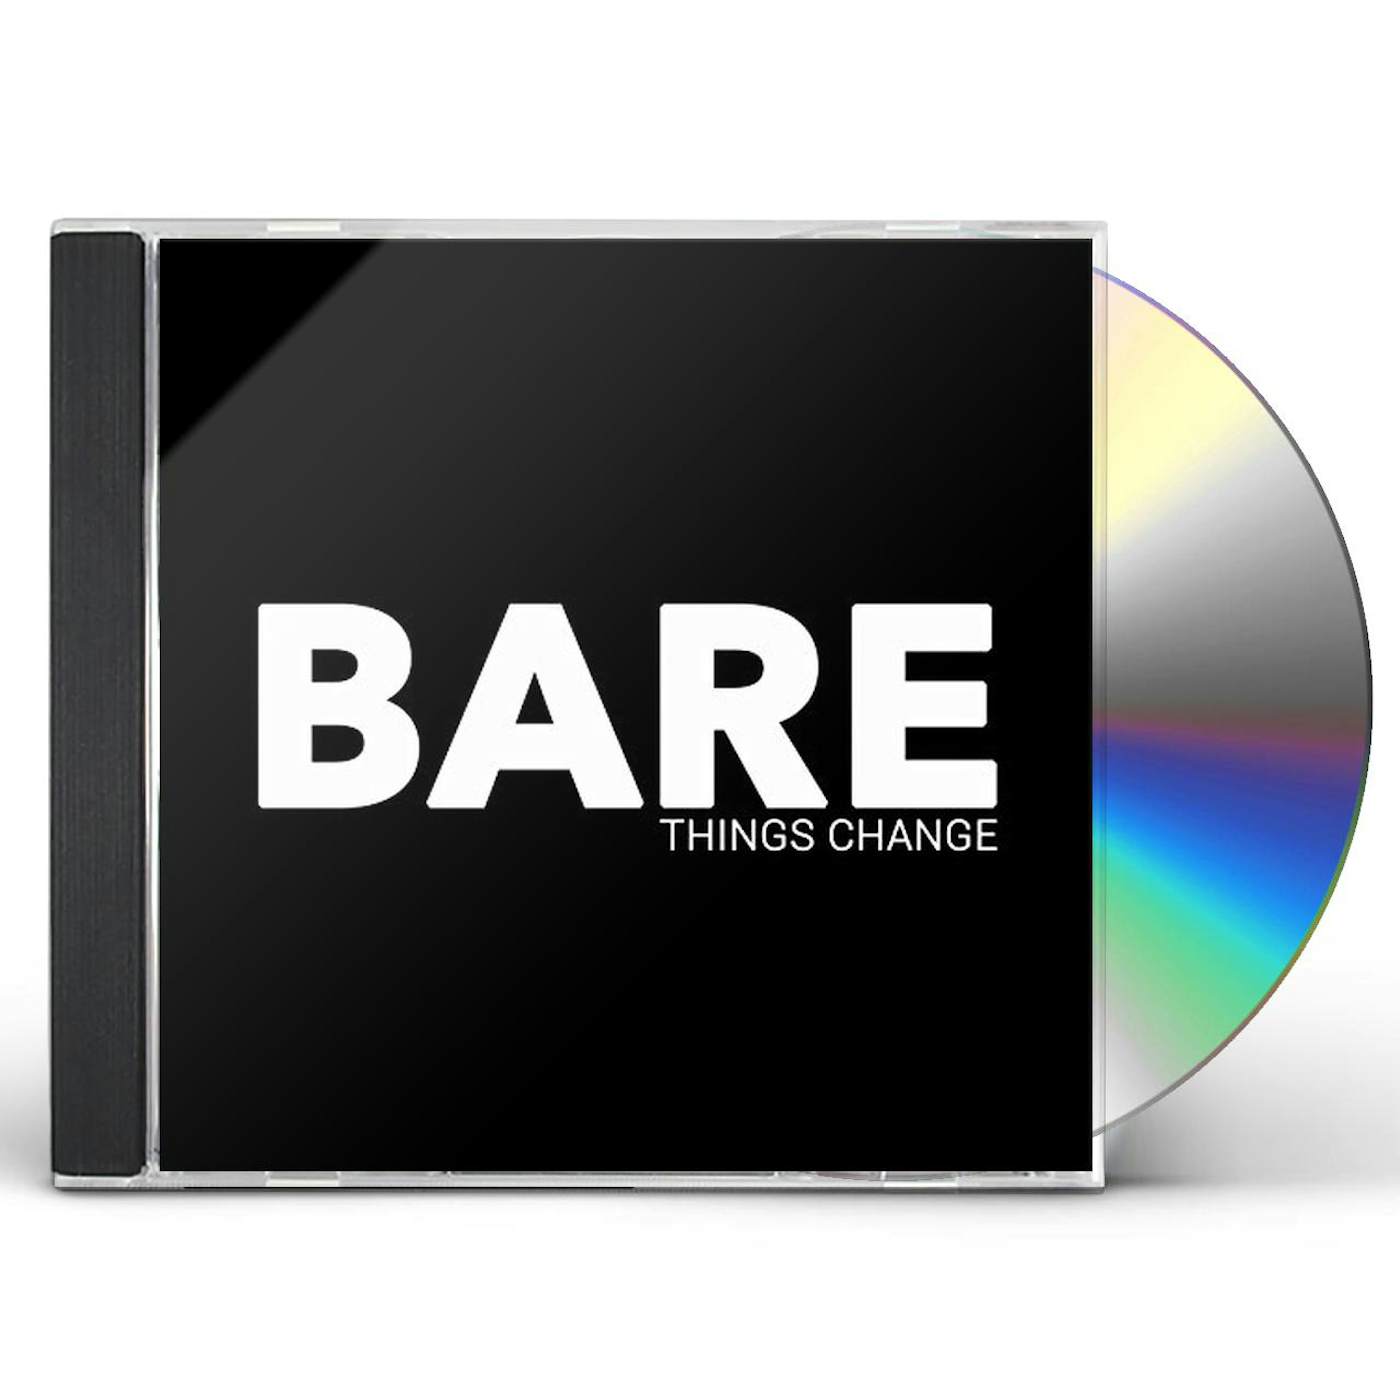 Bobby Bare THINGS CHANGE CD